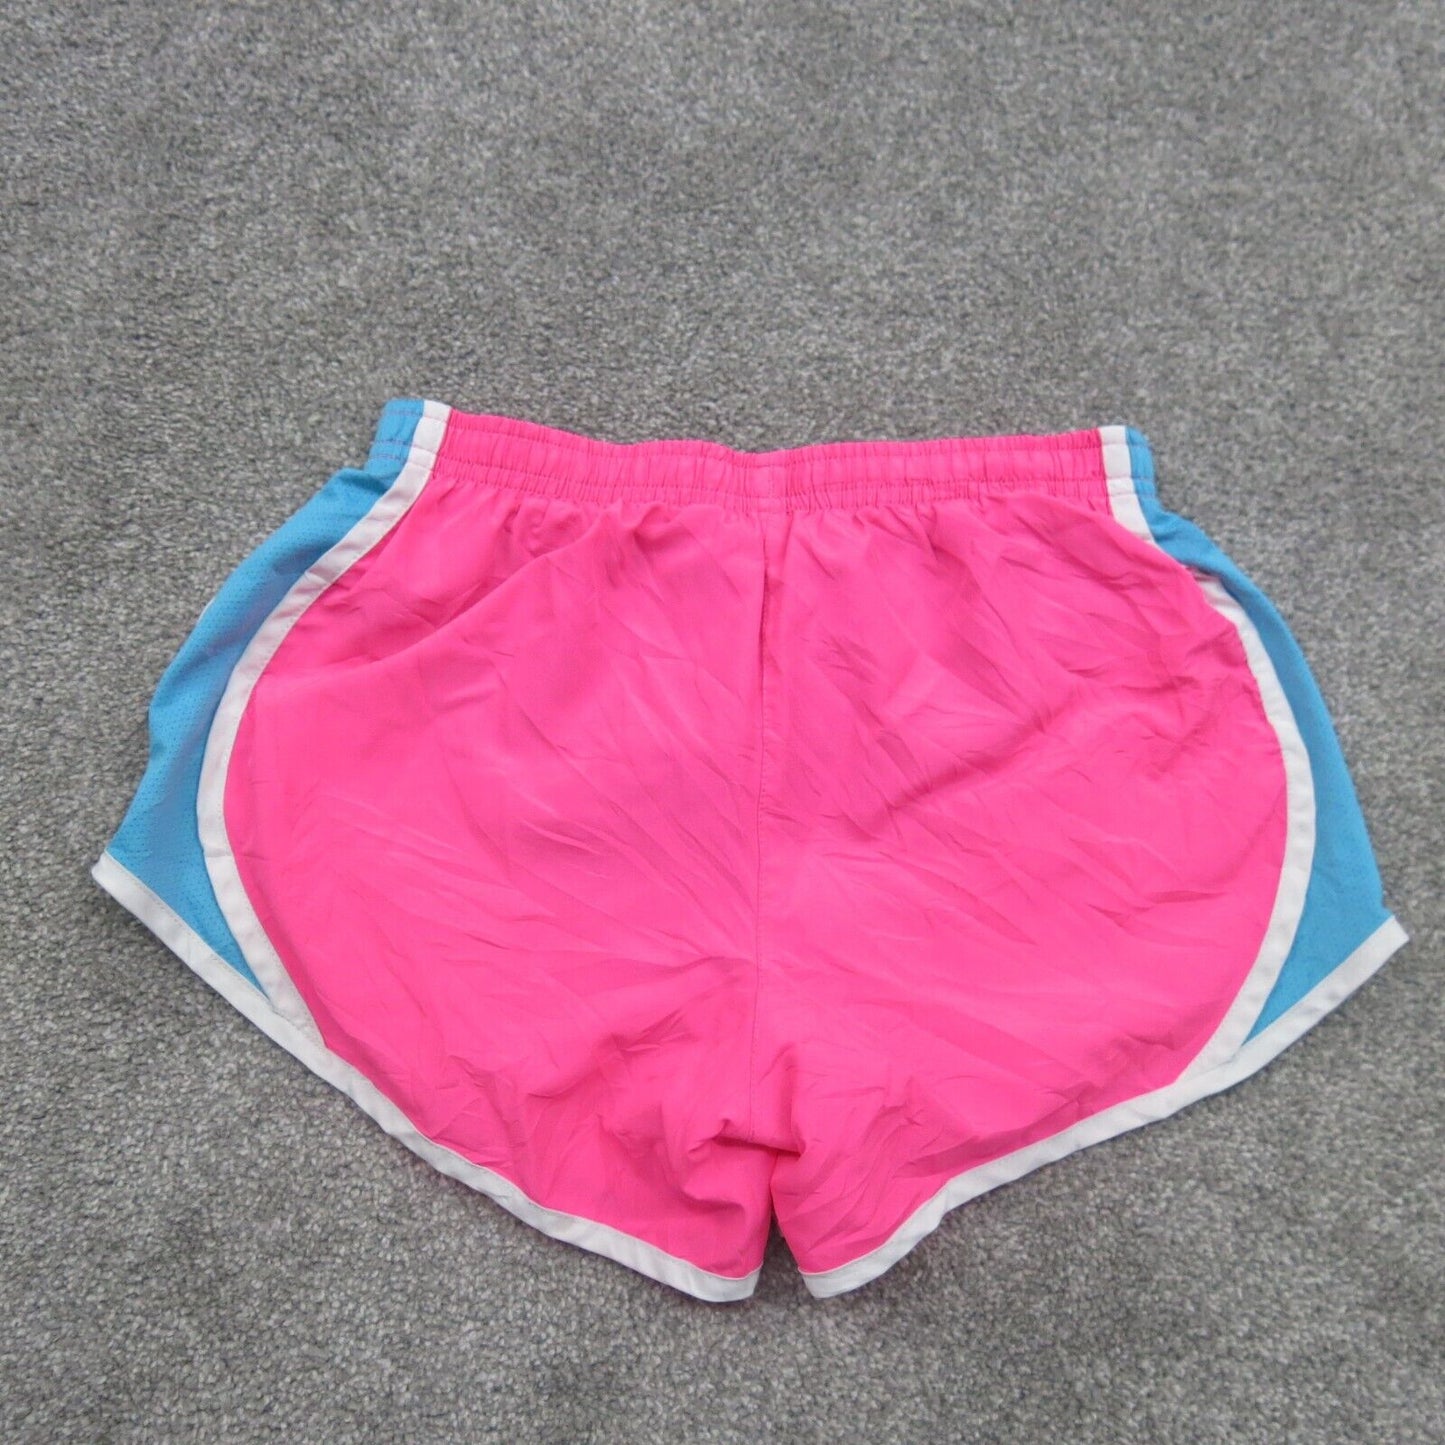 Nike Athletics Shorts Girls Medium Pink White Activewear Running Logo Shorts